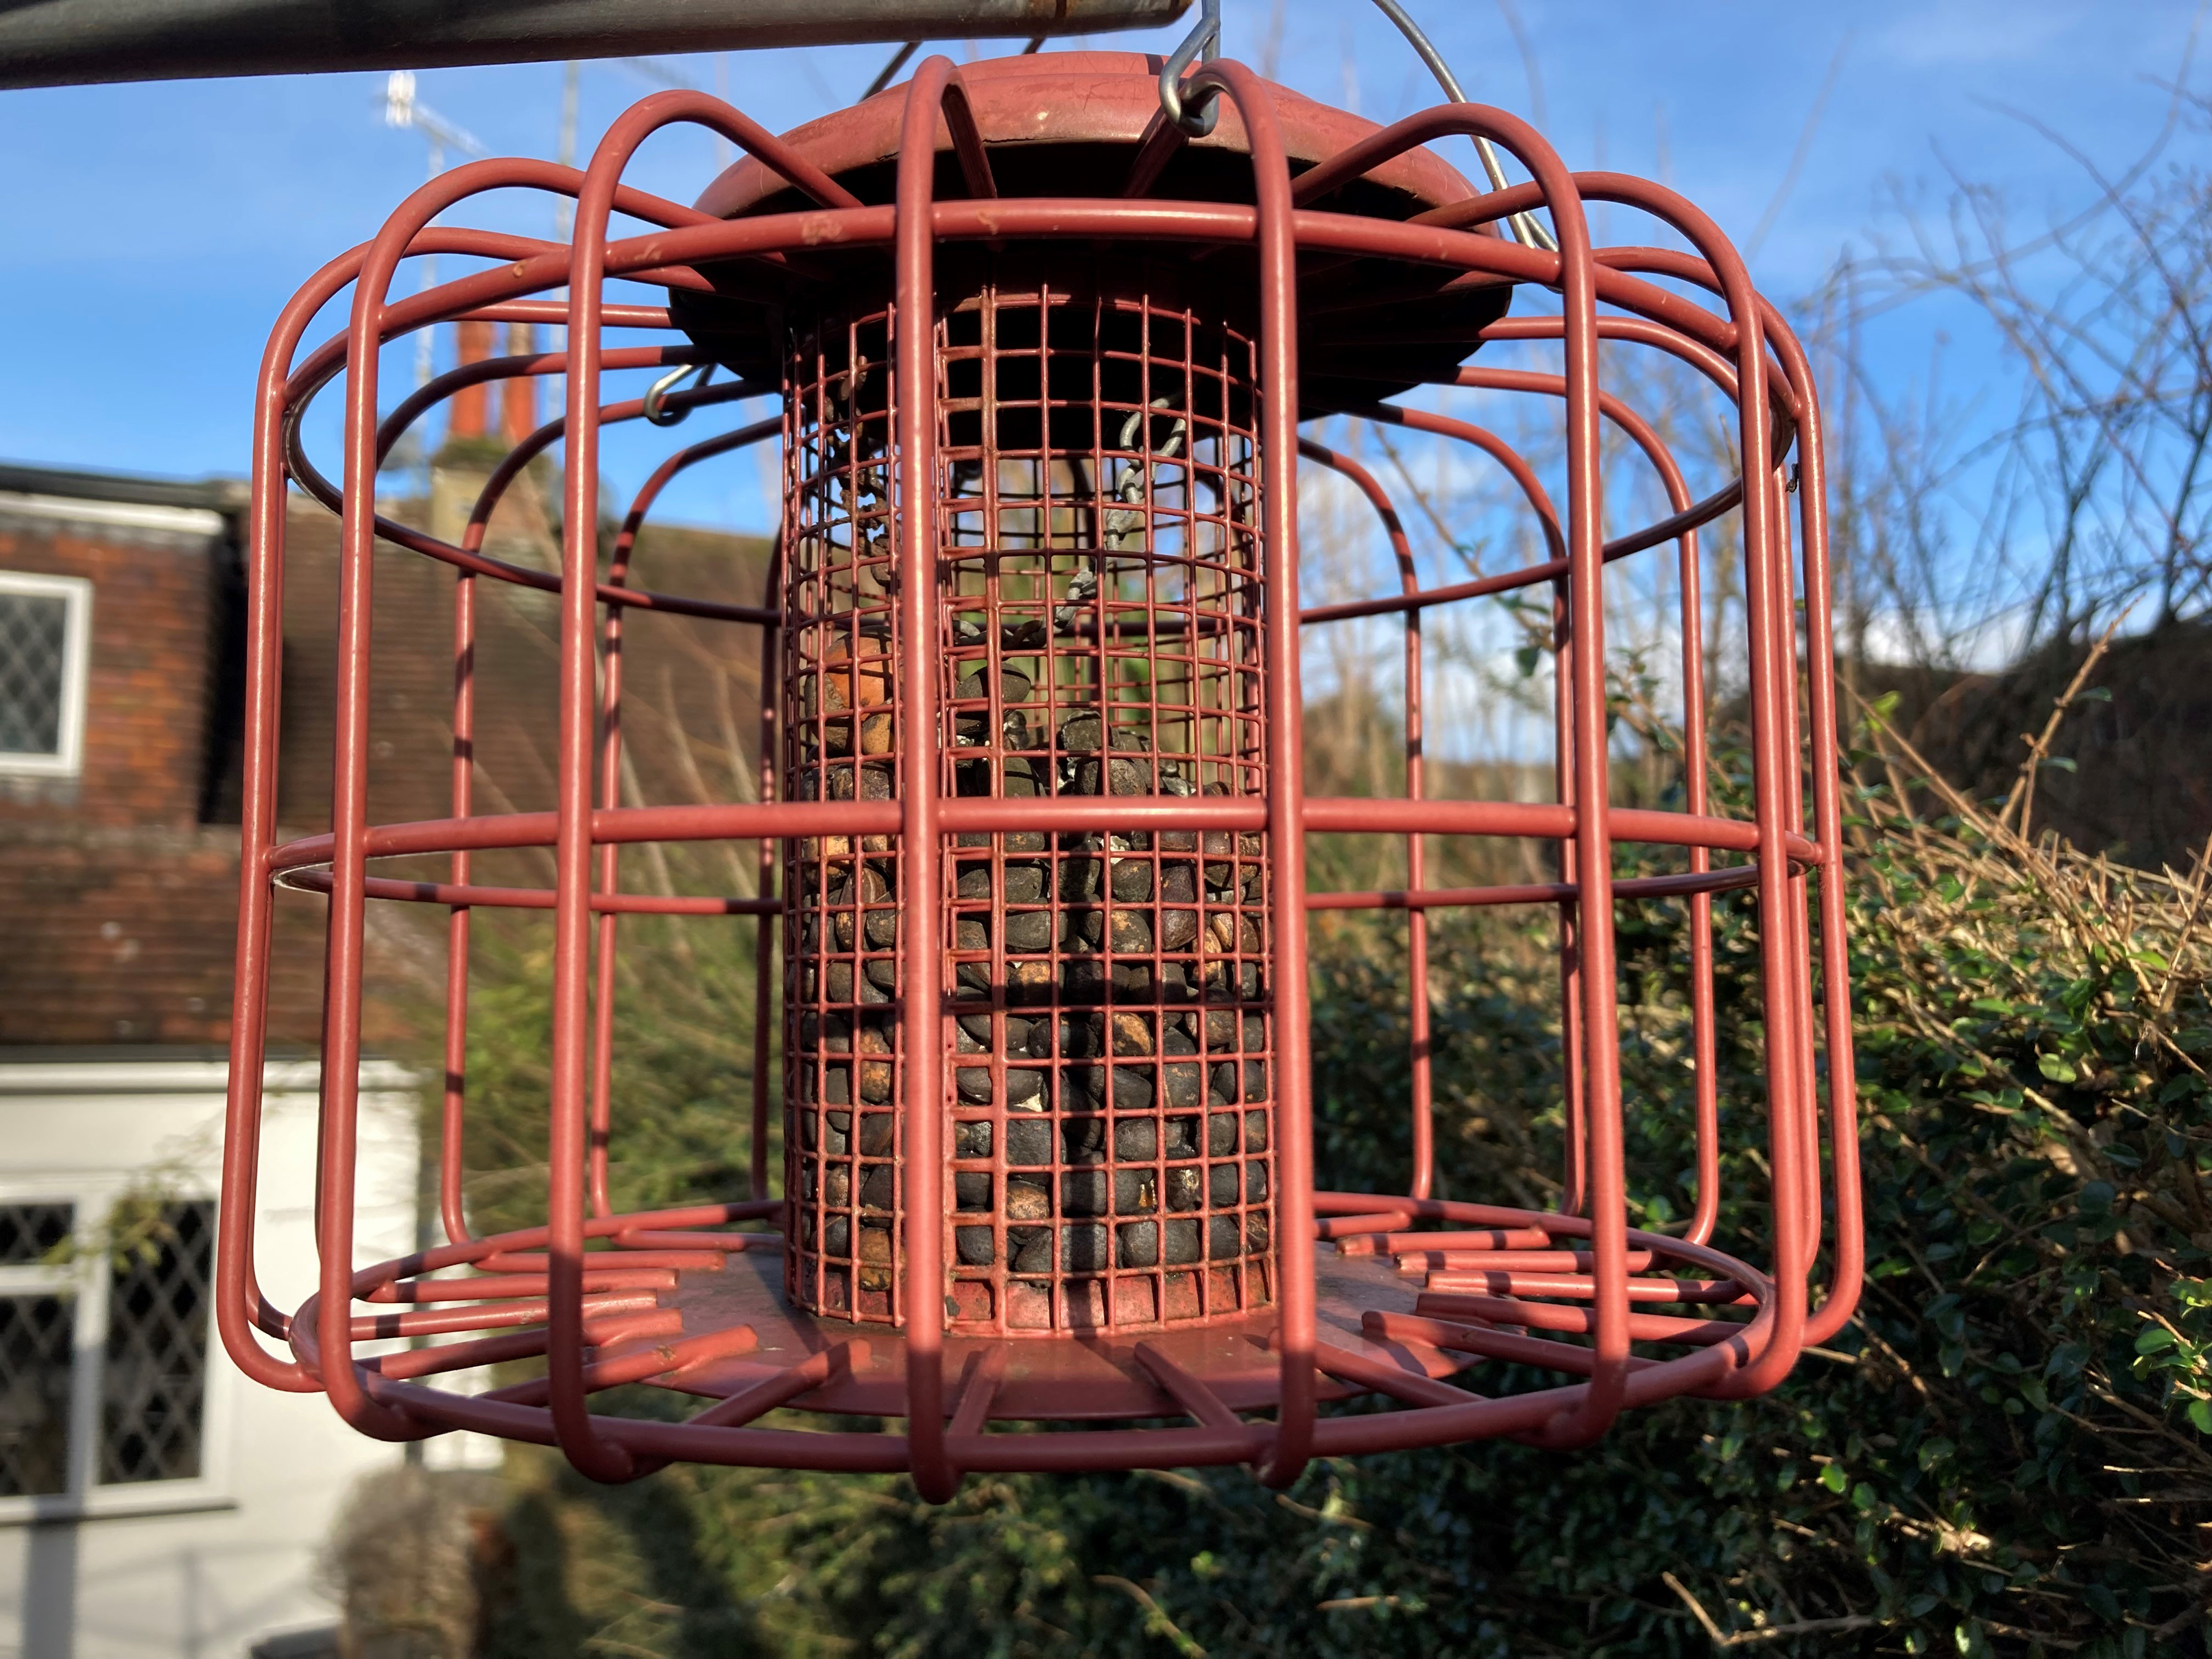 Peanuts in a bird feeder (Hannah Stephenson/PA)